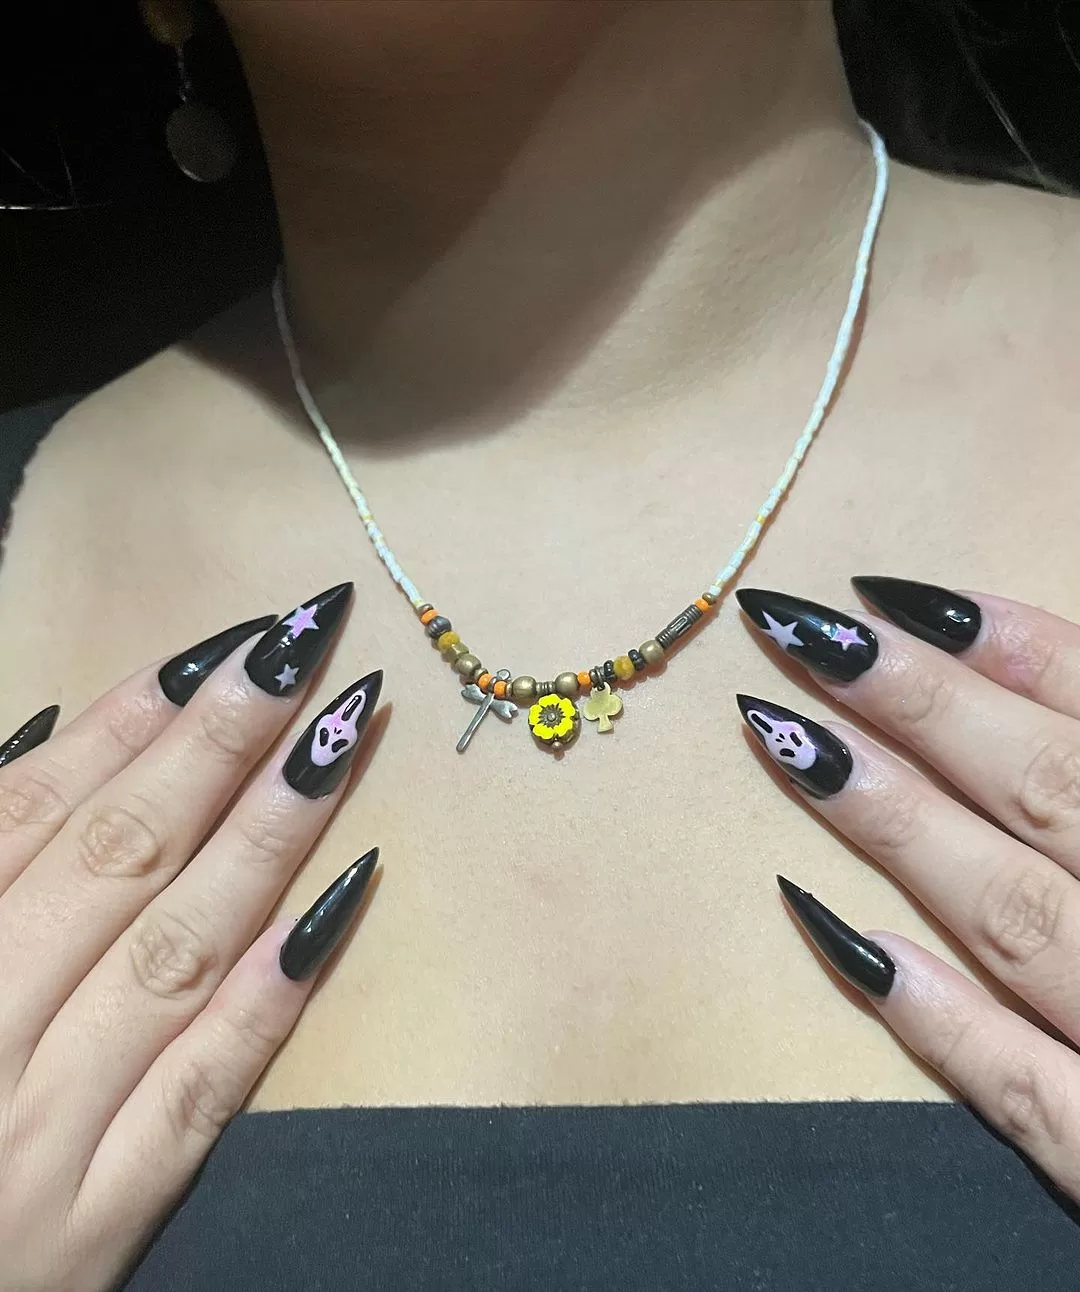 Sexy Halloween Nails